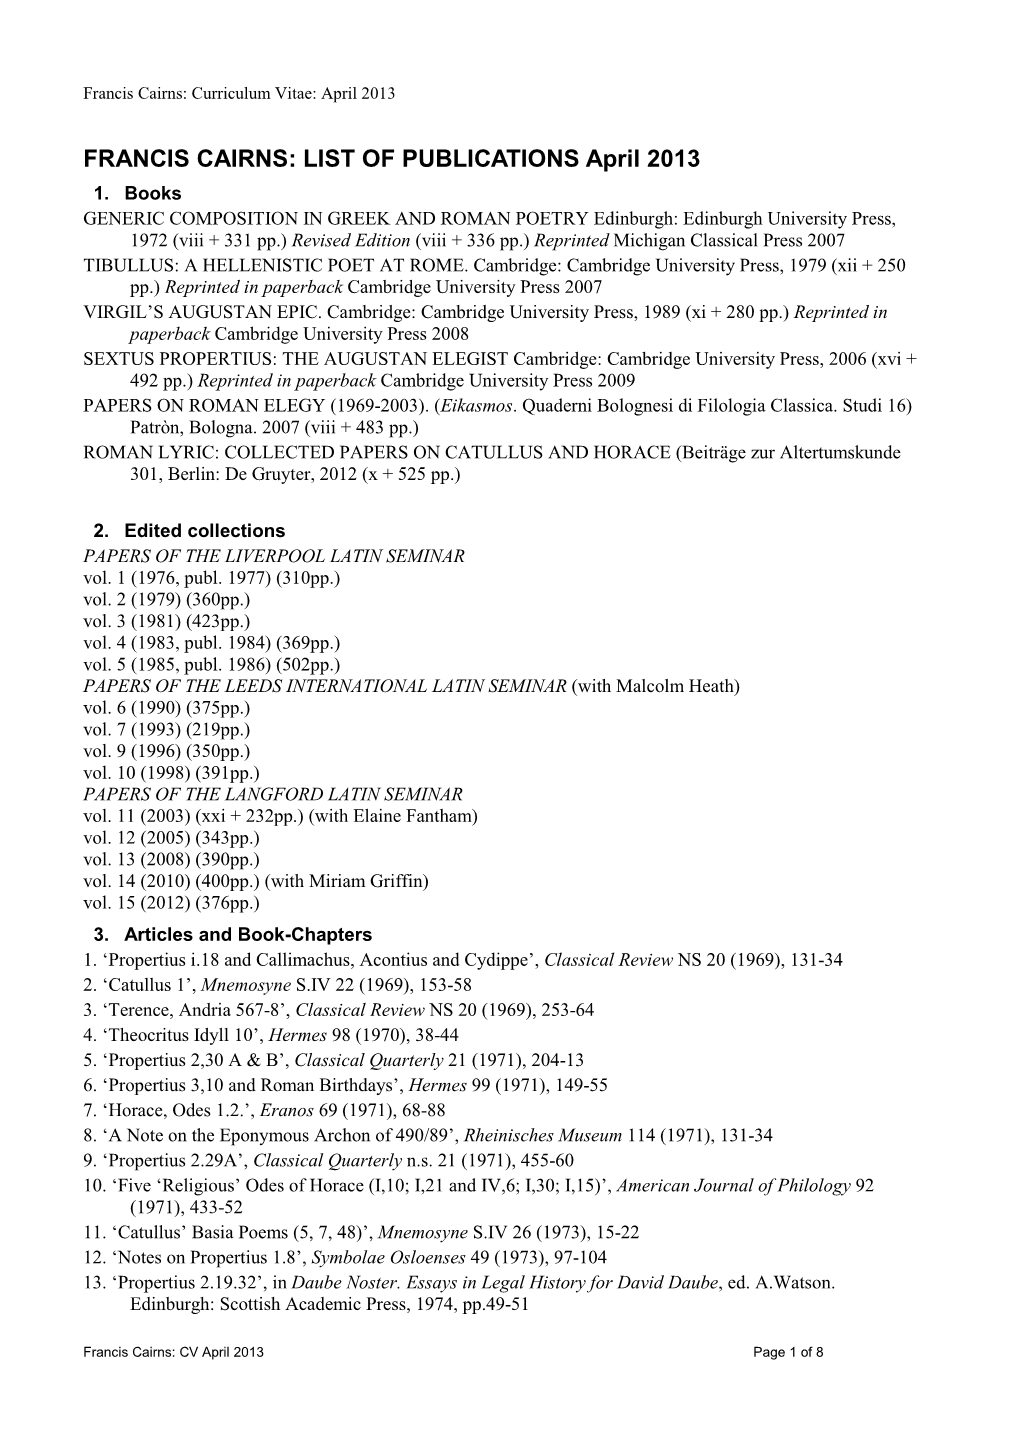 FRANCIS CAIRNS: LIST of PUBLICATIONS April 2013 1